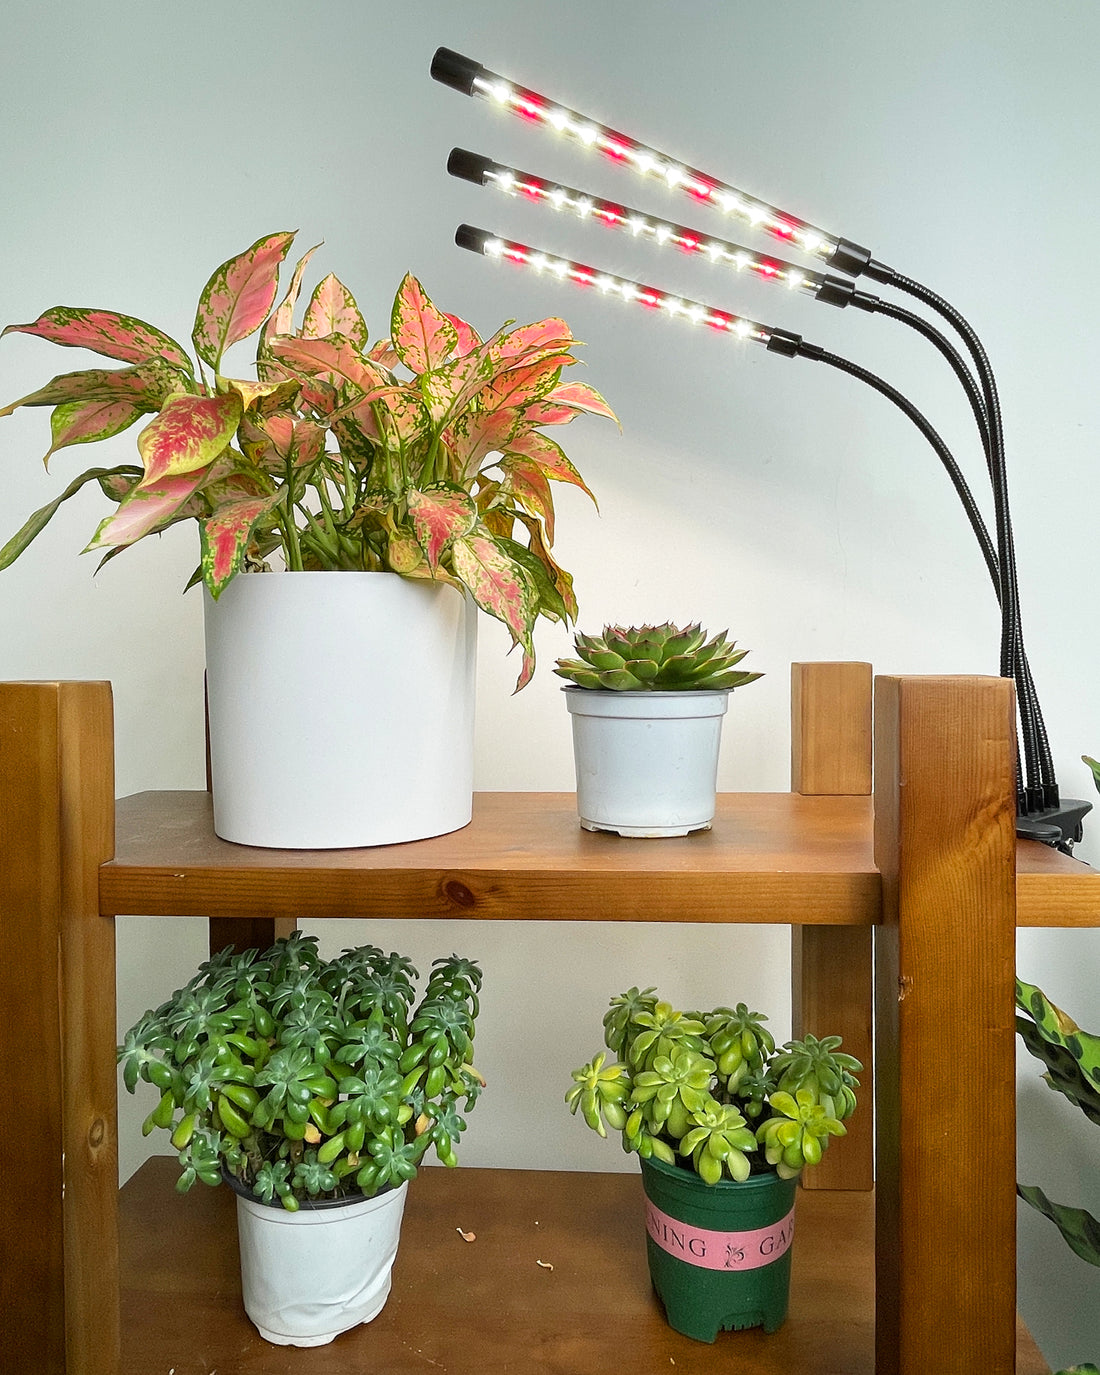 GLOWRIUM®Full Spectrum LED Clamp Grow Lights for Indoor Plants